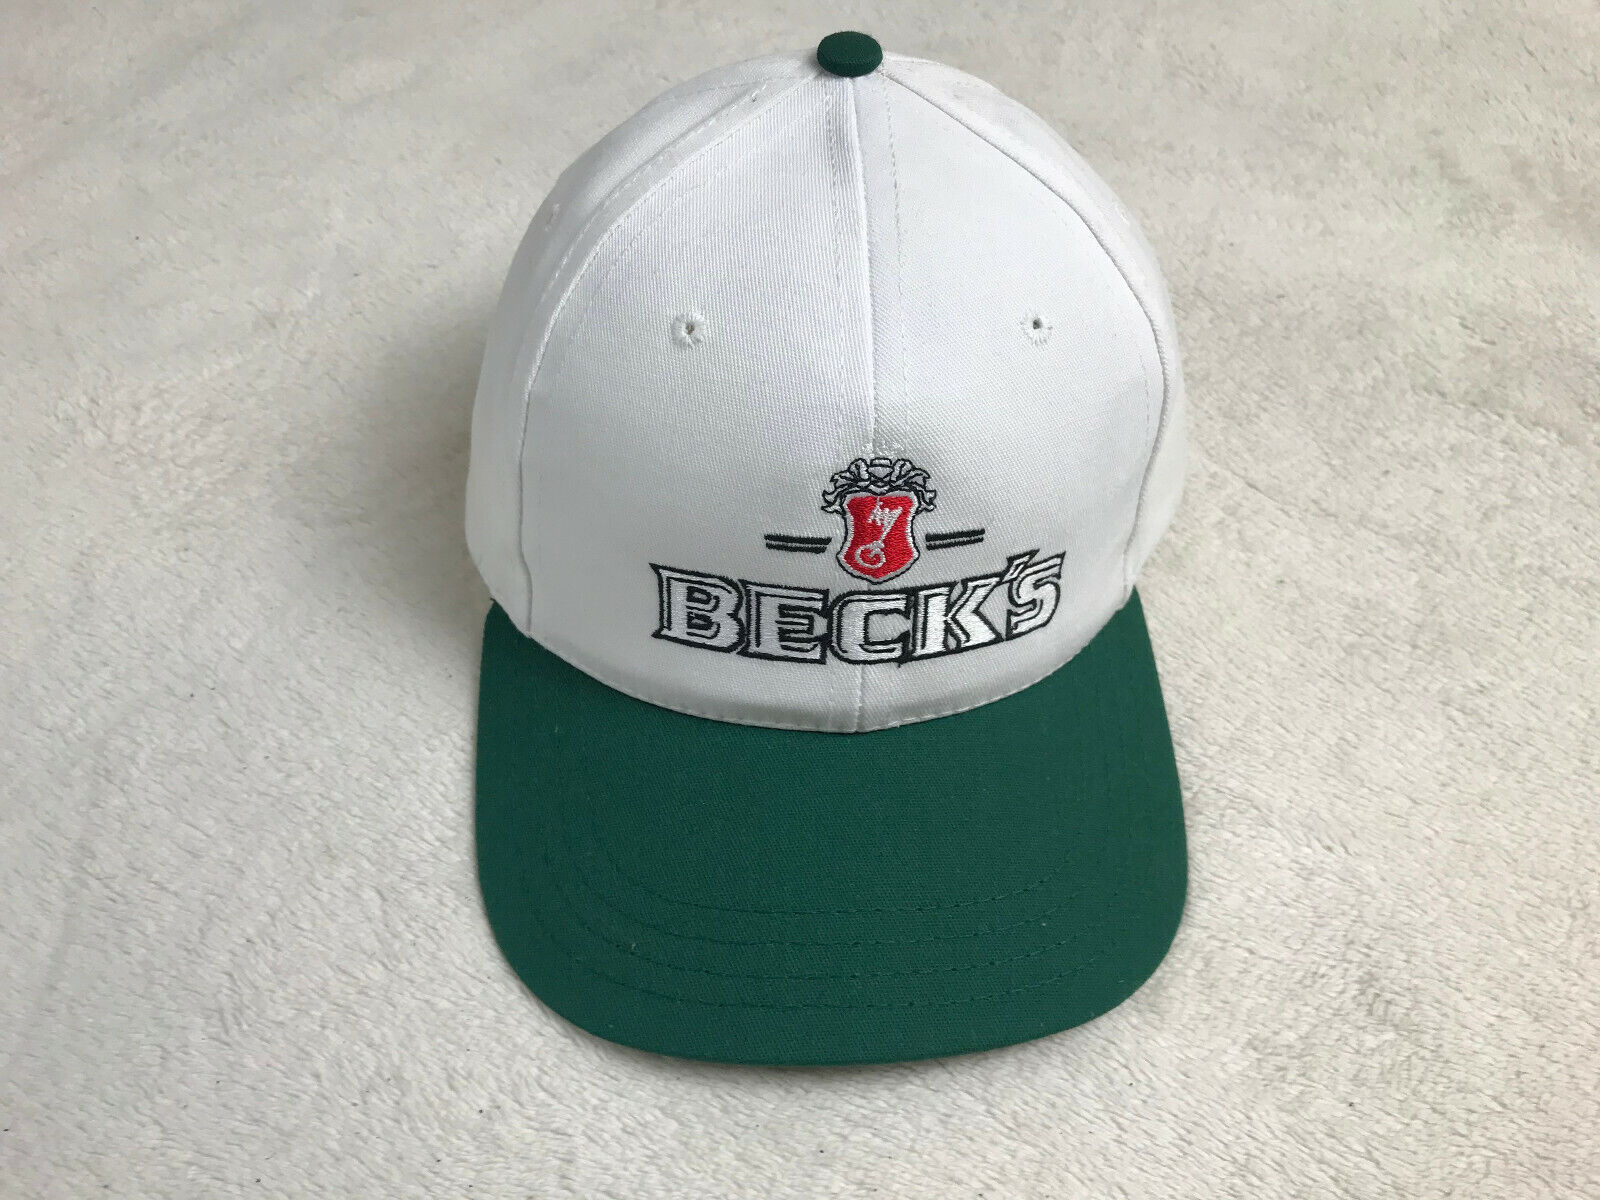 Becks Beer Embroidered Baseball Golf Hat White Green Adjustable NEW